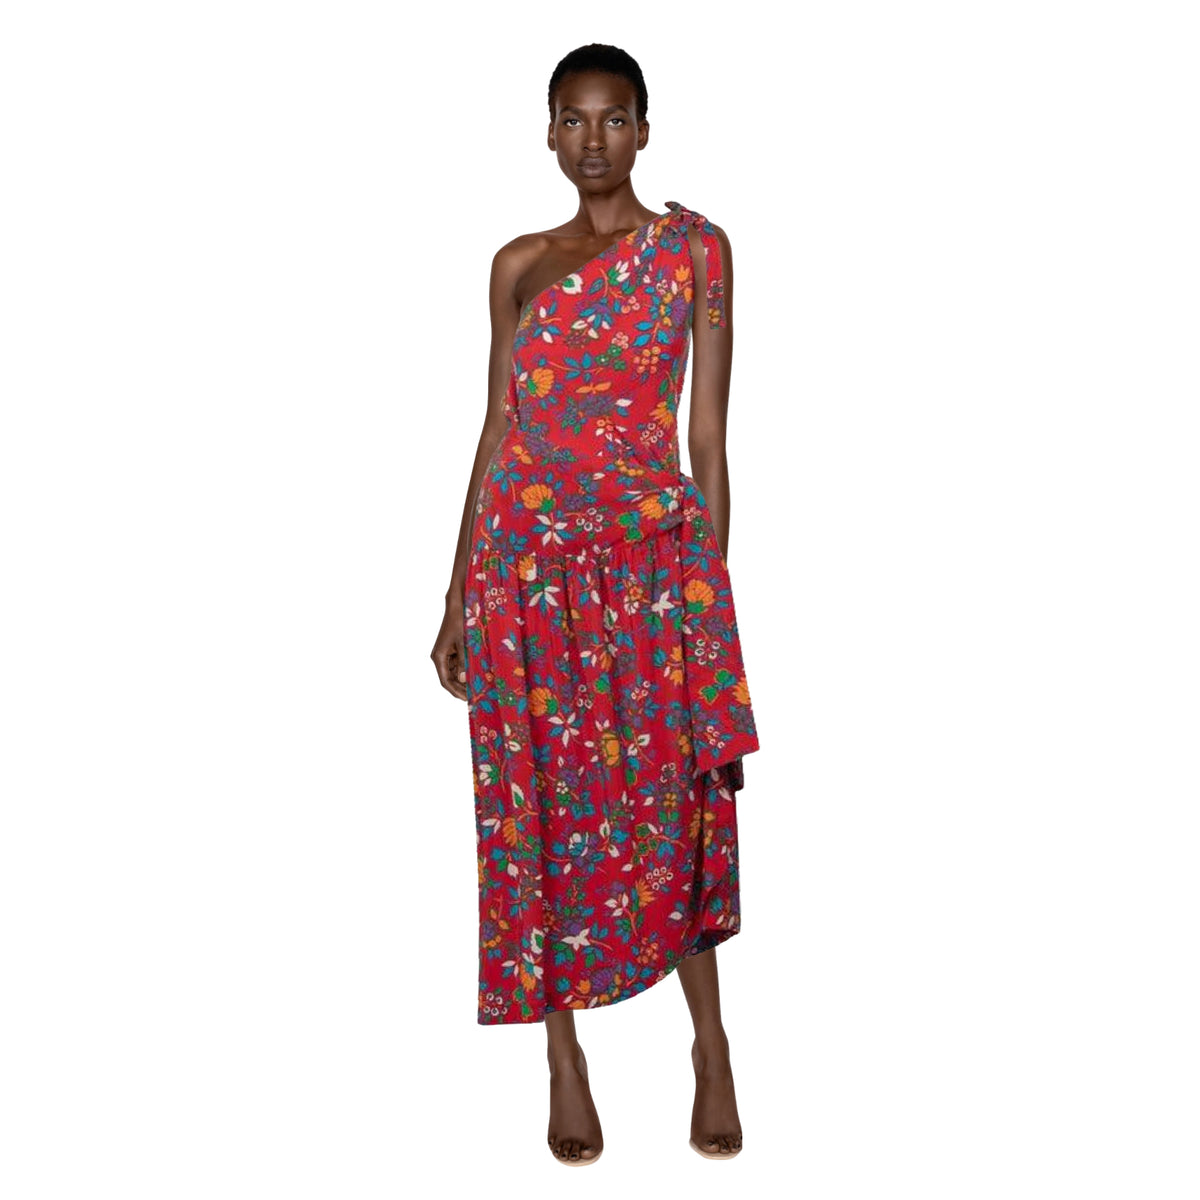 Yves Saint Laurent Multicolor Floral Print Top and Skirt Set | 42